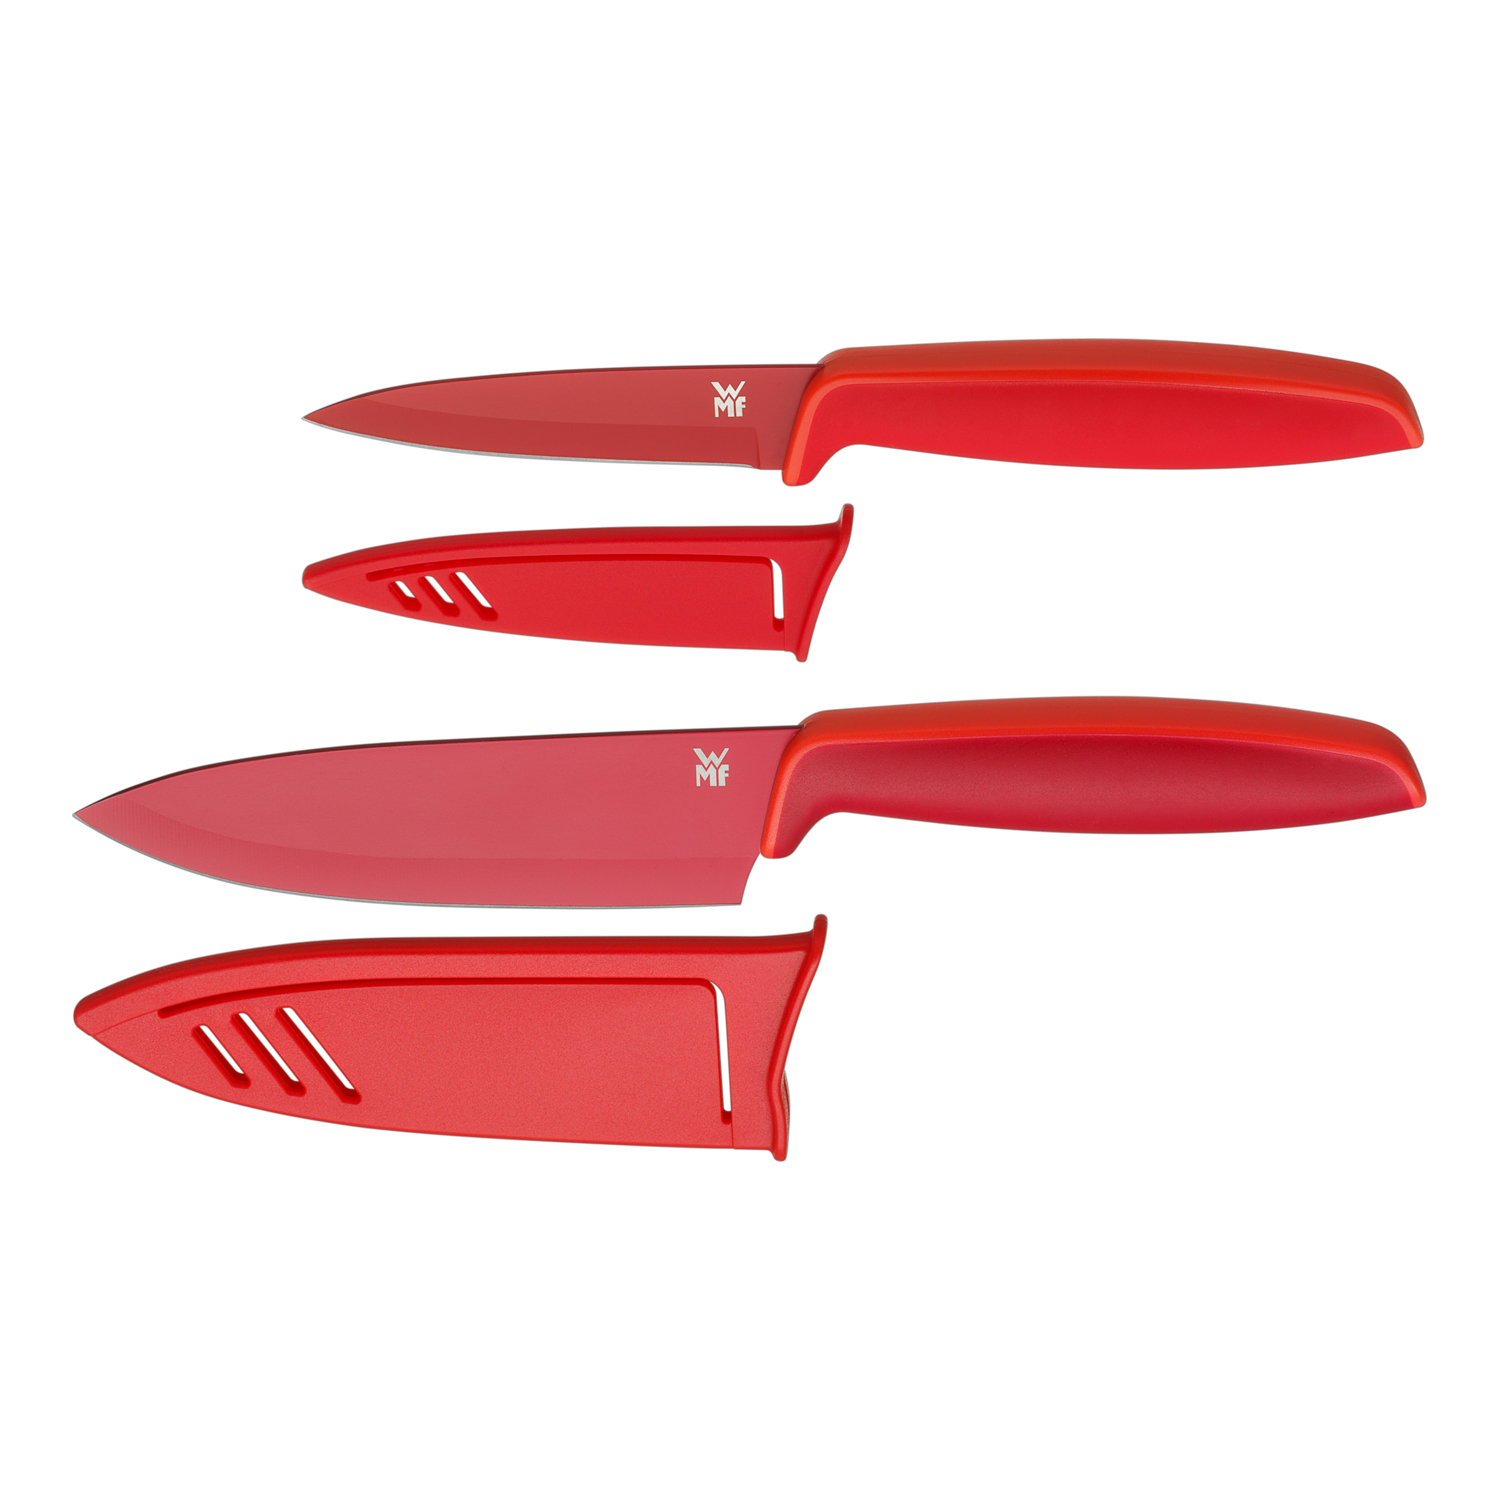 Sada kuchyňských nožů 2dílná červená Touch WMF